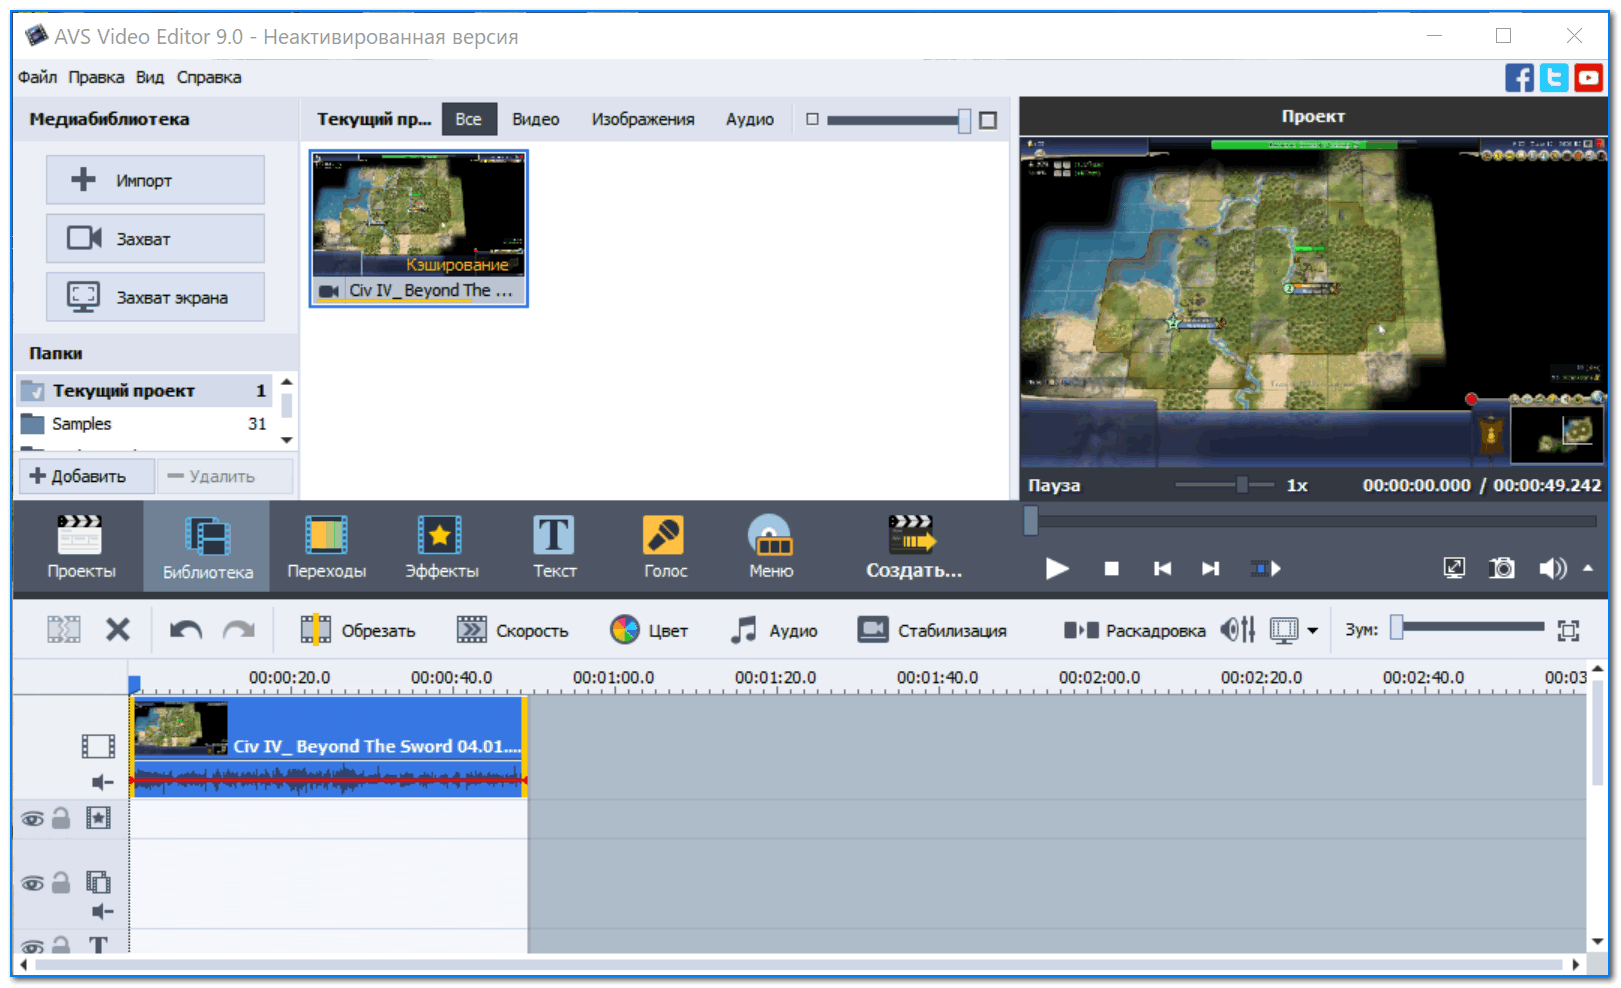 AVS Video Editor - главное окно